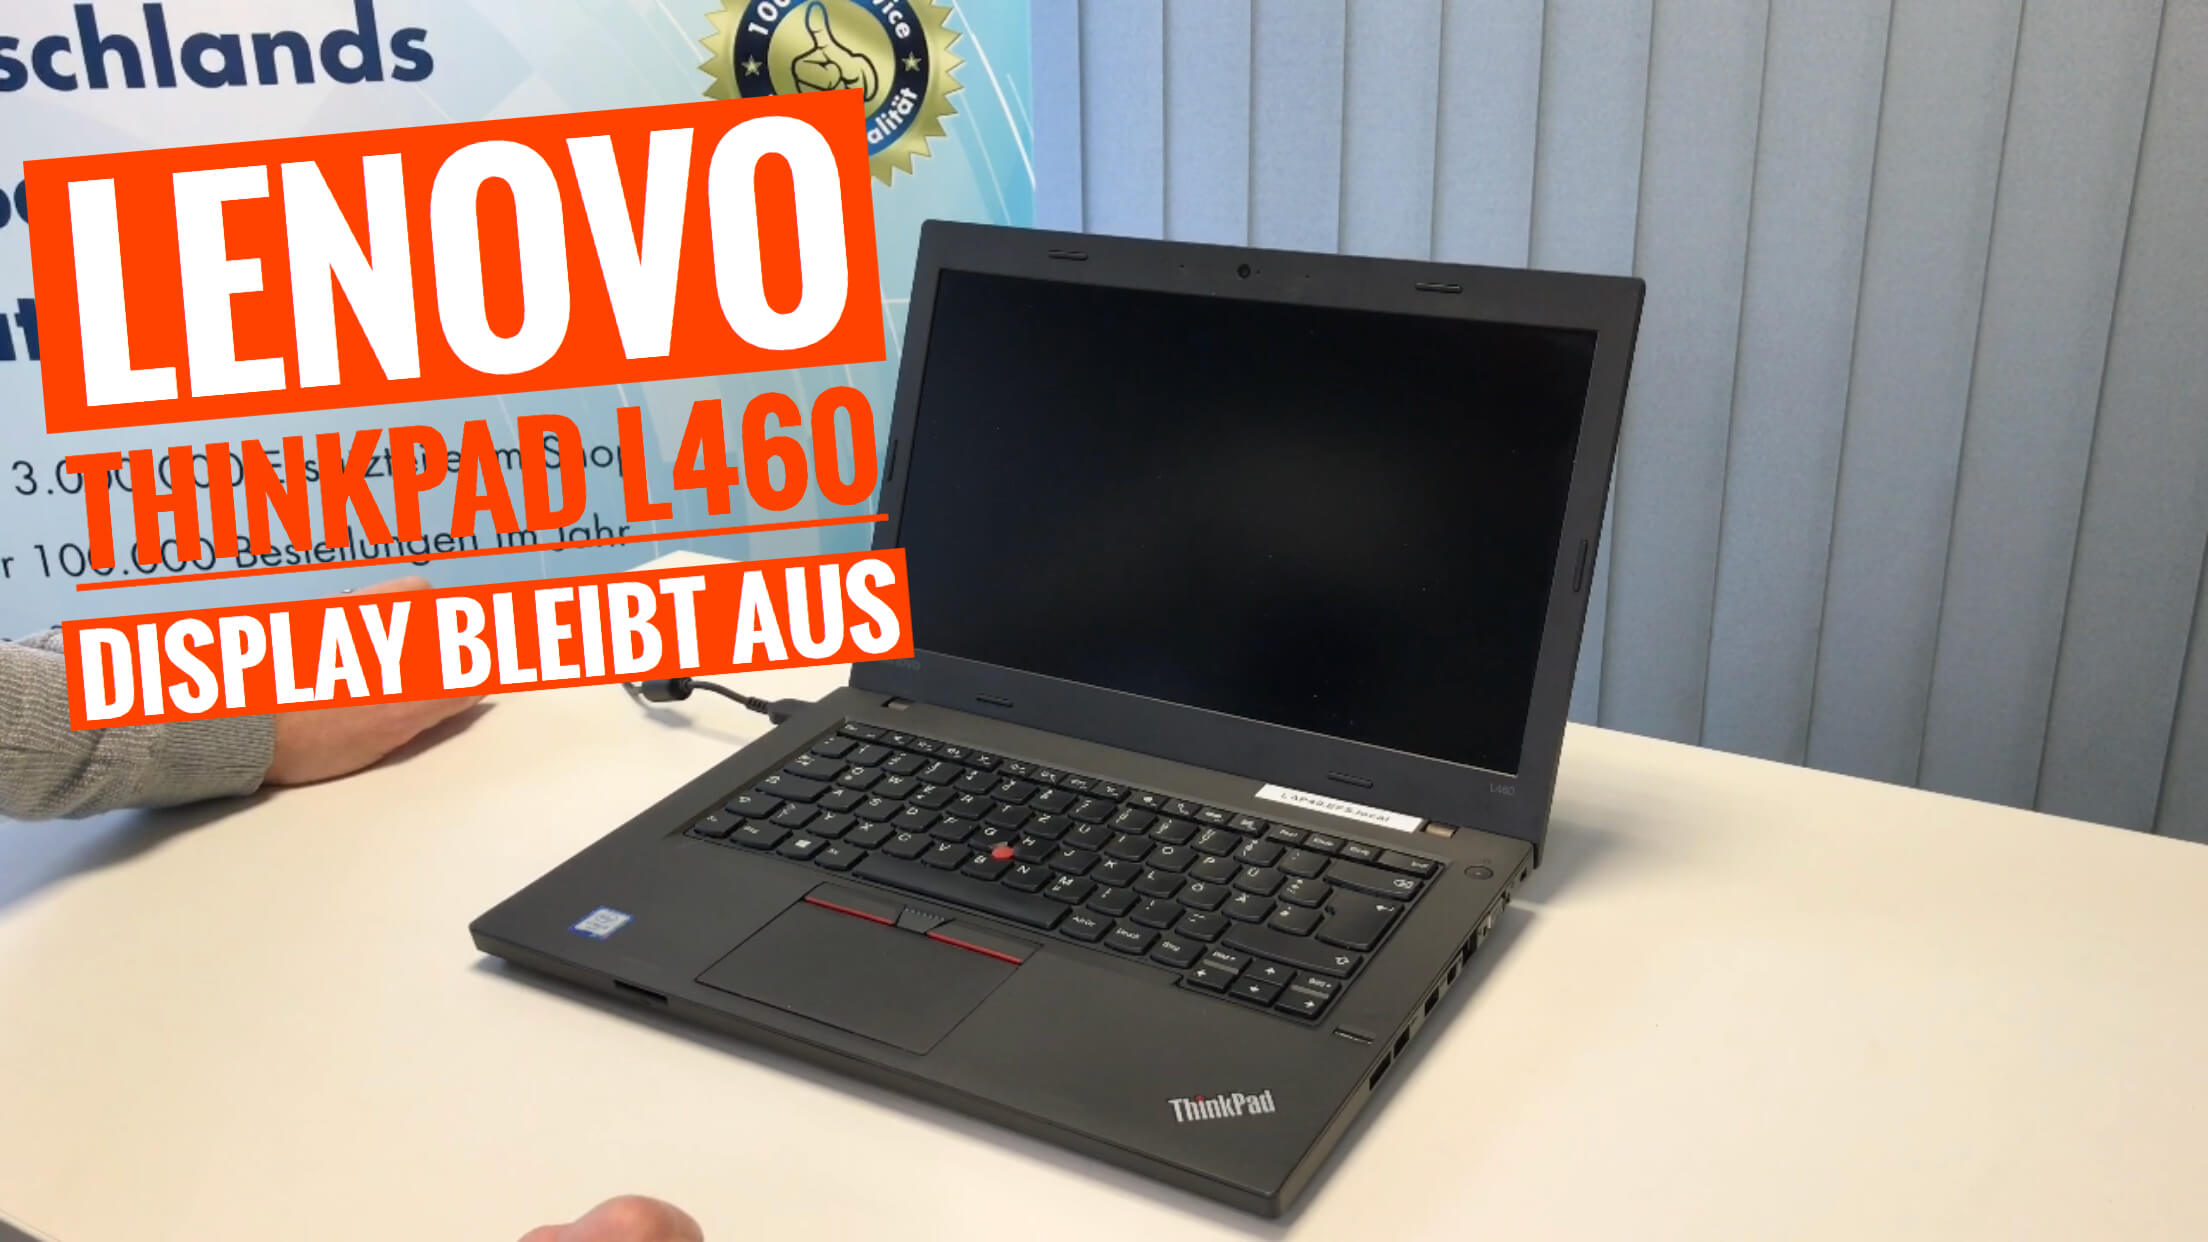 Lenovo ThinkPad L460 Display bleibt aus